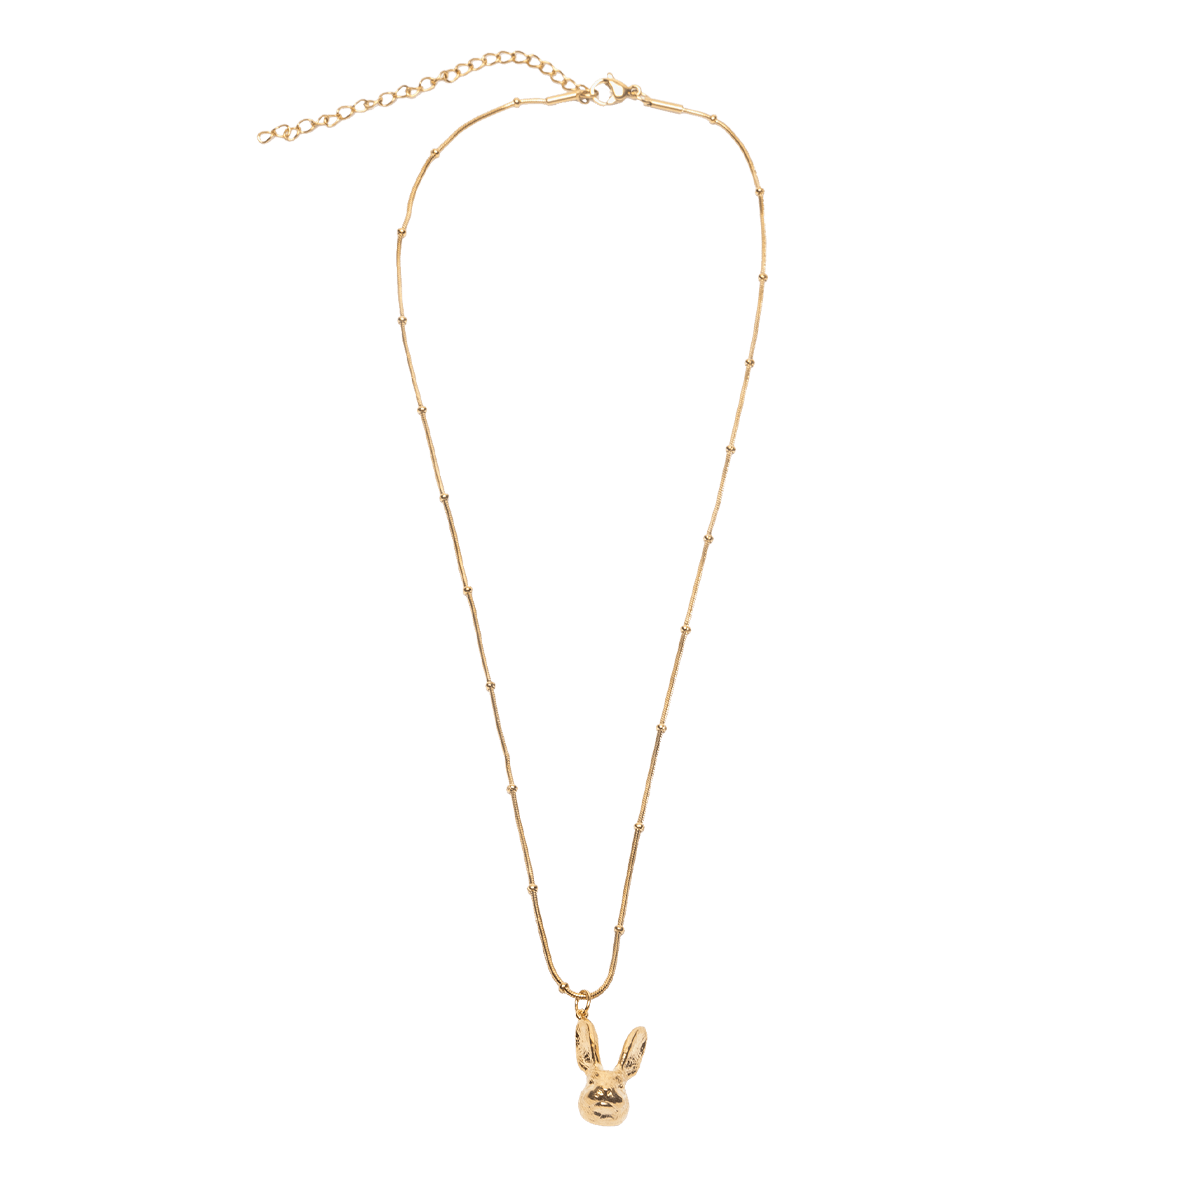 Penajewels Animals Rabbit Necklace